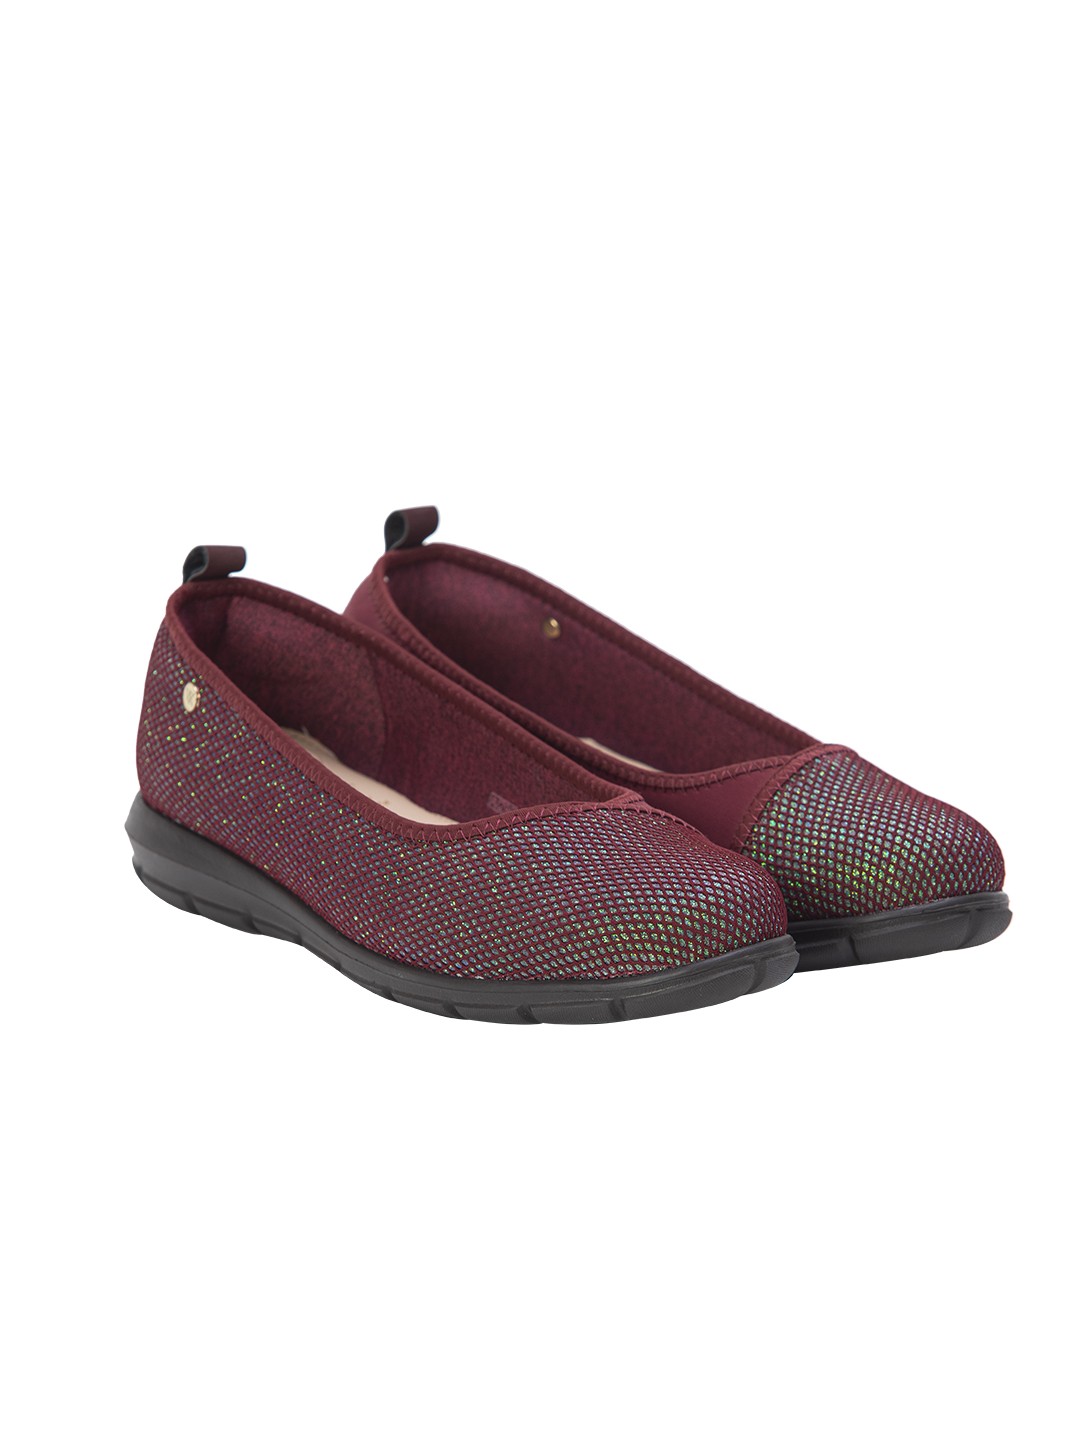 Buy Von Wellx Germany Comfort Pace Mehroon Casual Shoes Online in Kochi